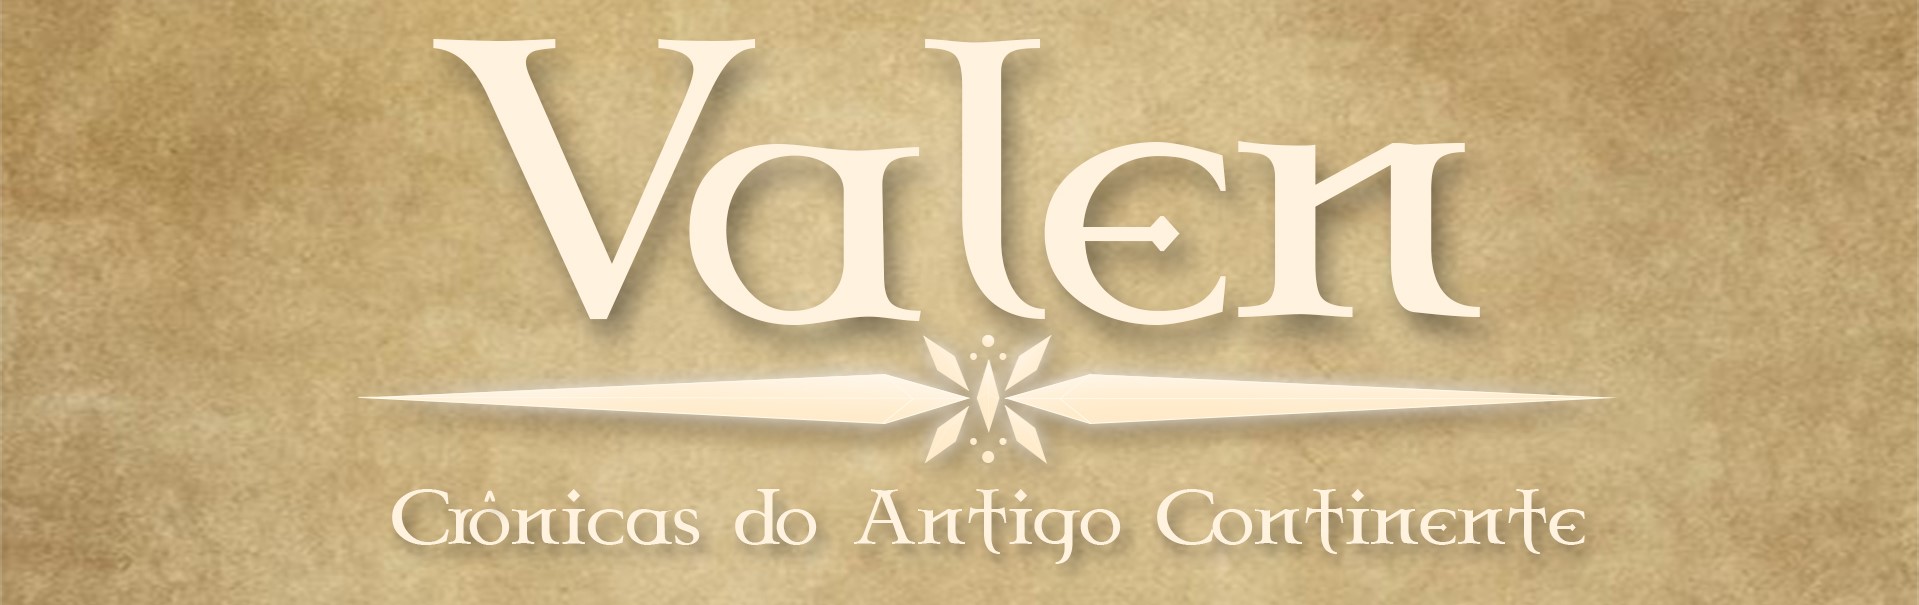 Valen - Crônicas do Antigo Continente